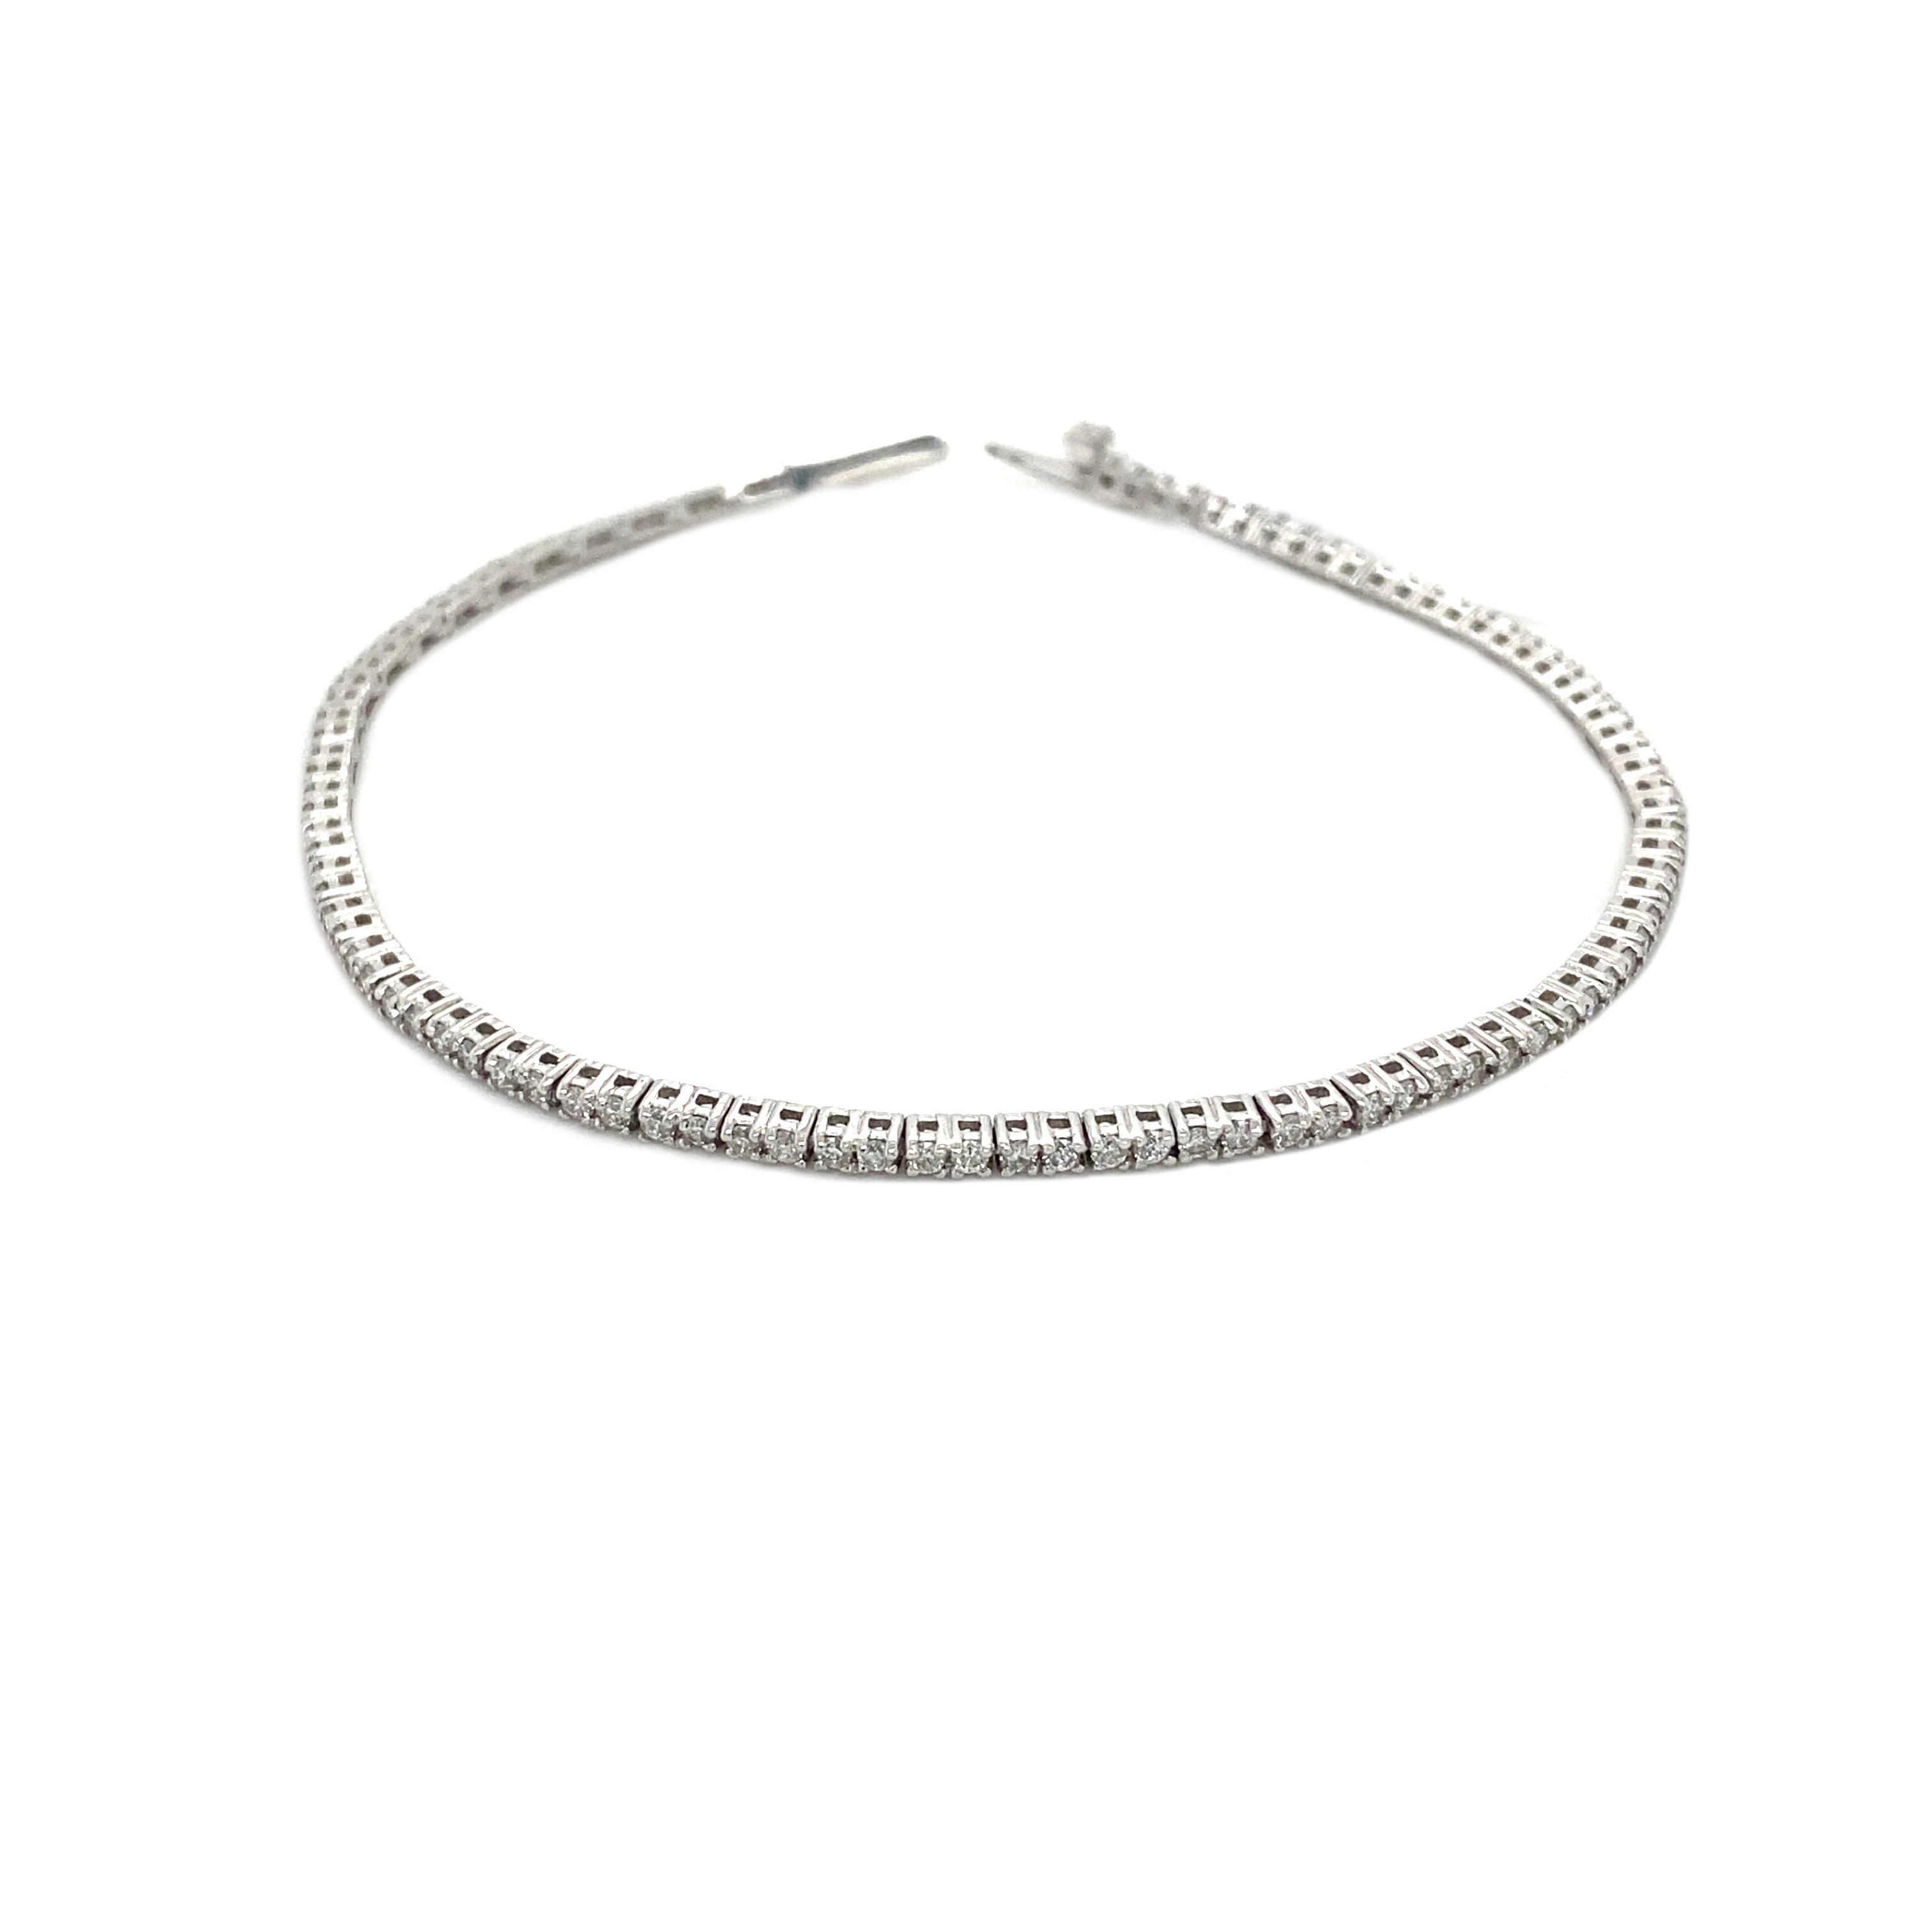 1.28 Carat Diamond Tennis Bracelet